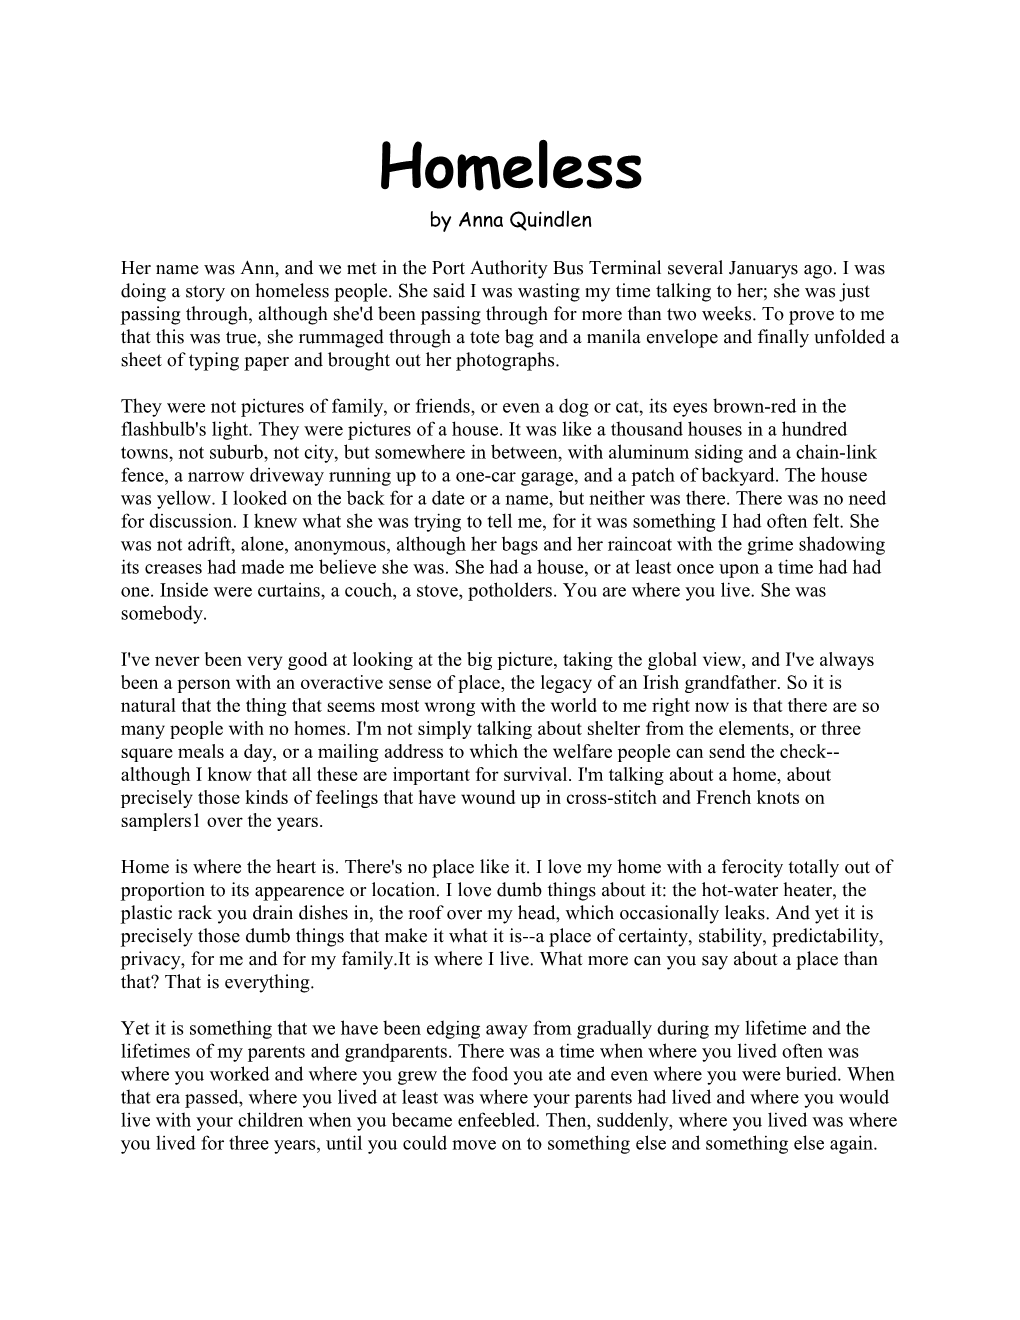 Homeless by Anna Quindlen